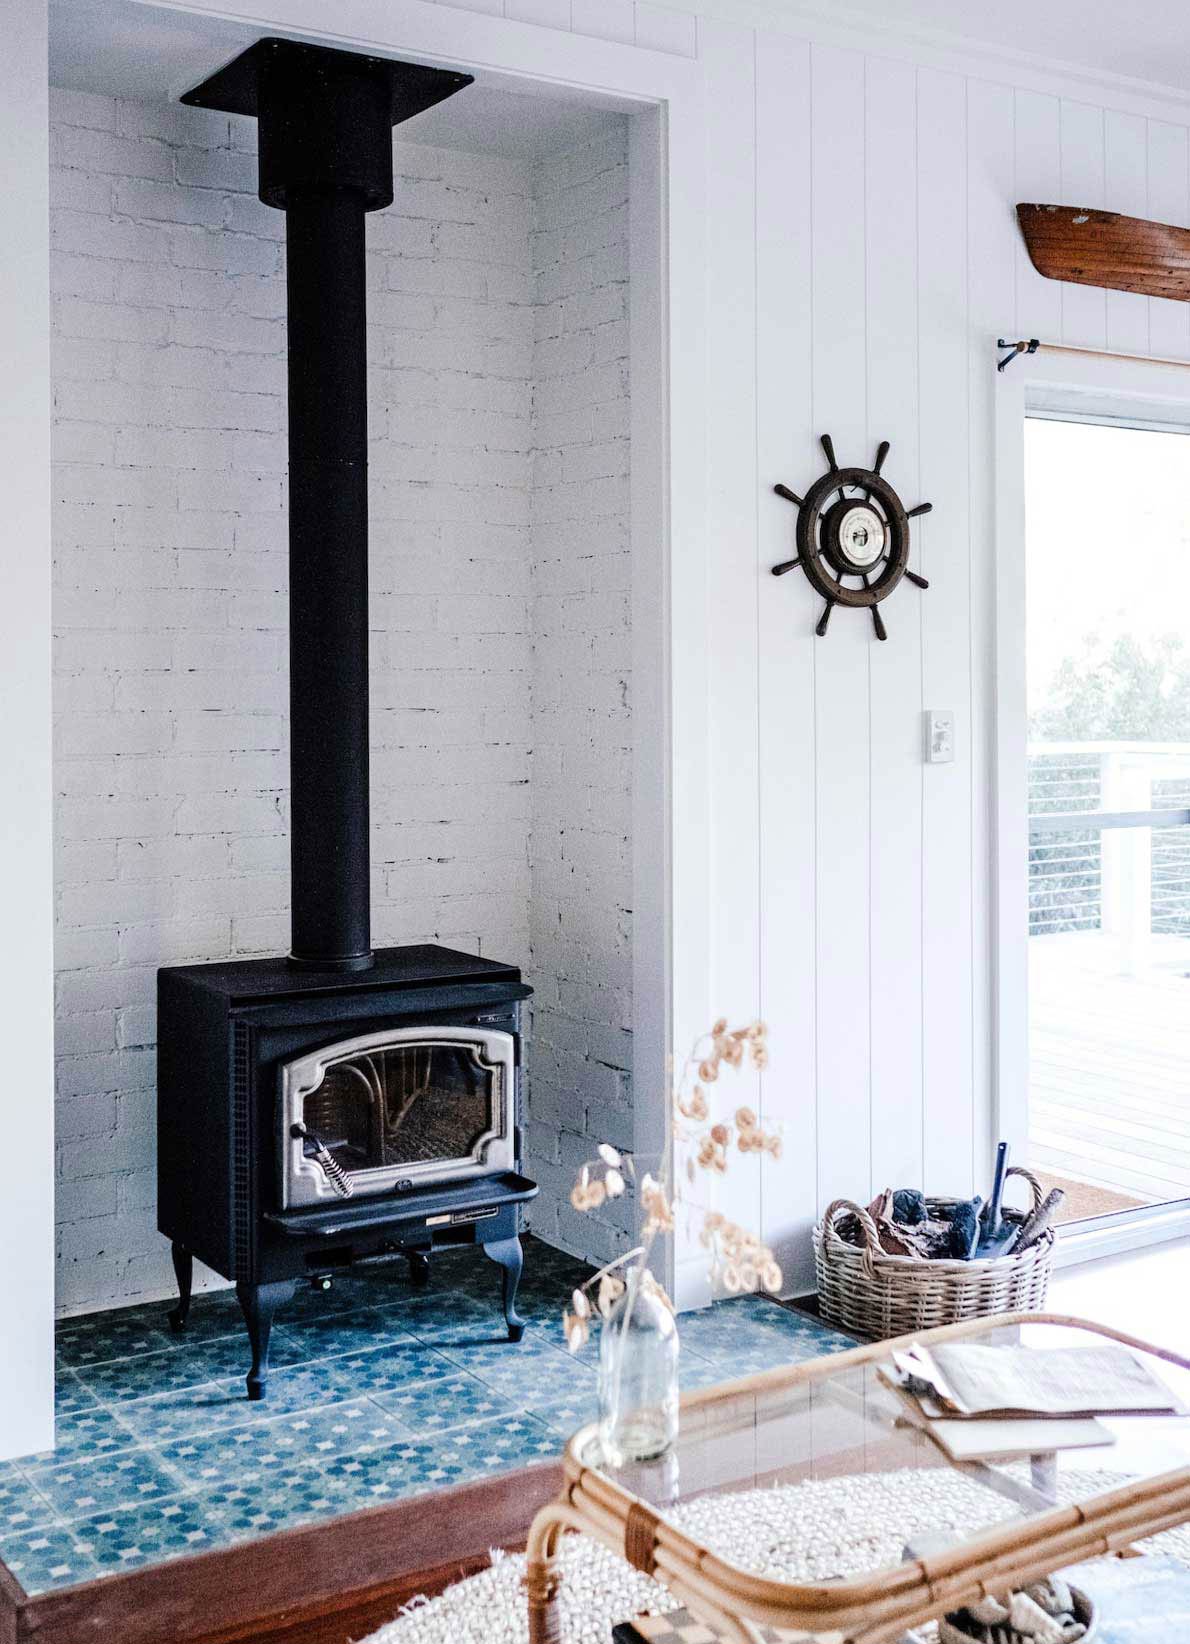 Small wood-burning stove in white marine interior